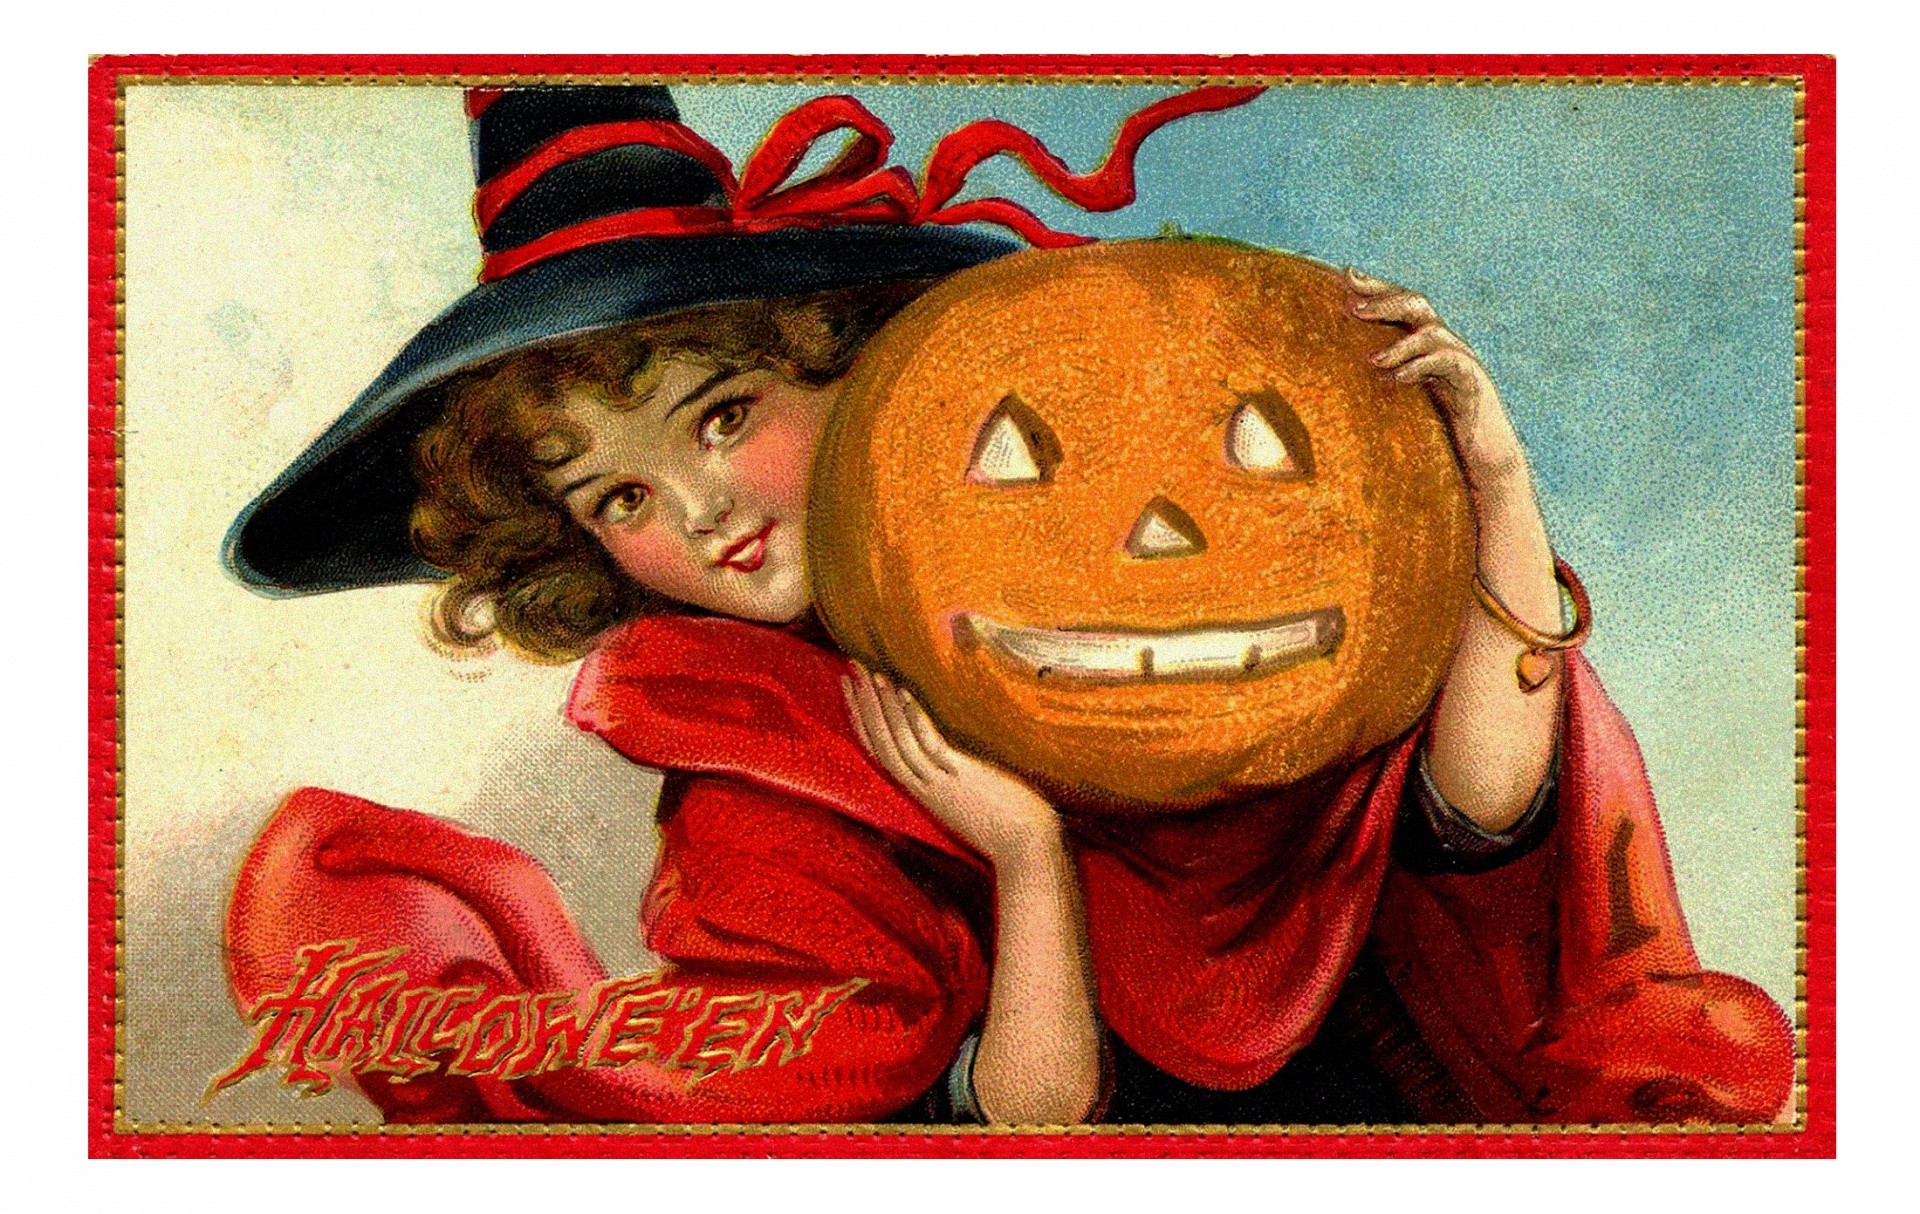 Halloween Vintage Card